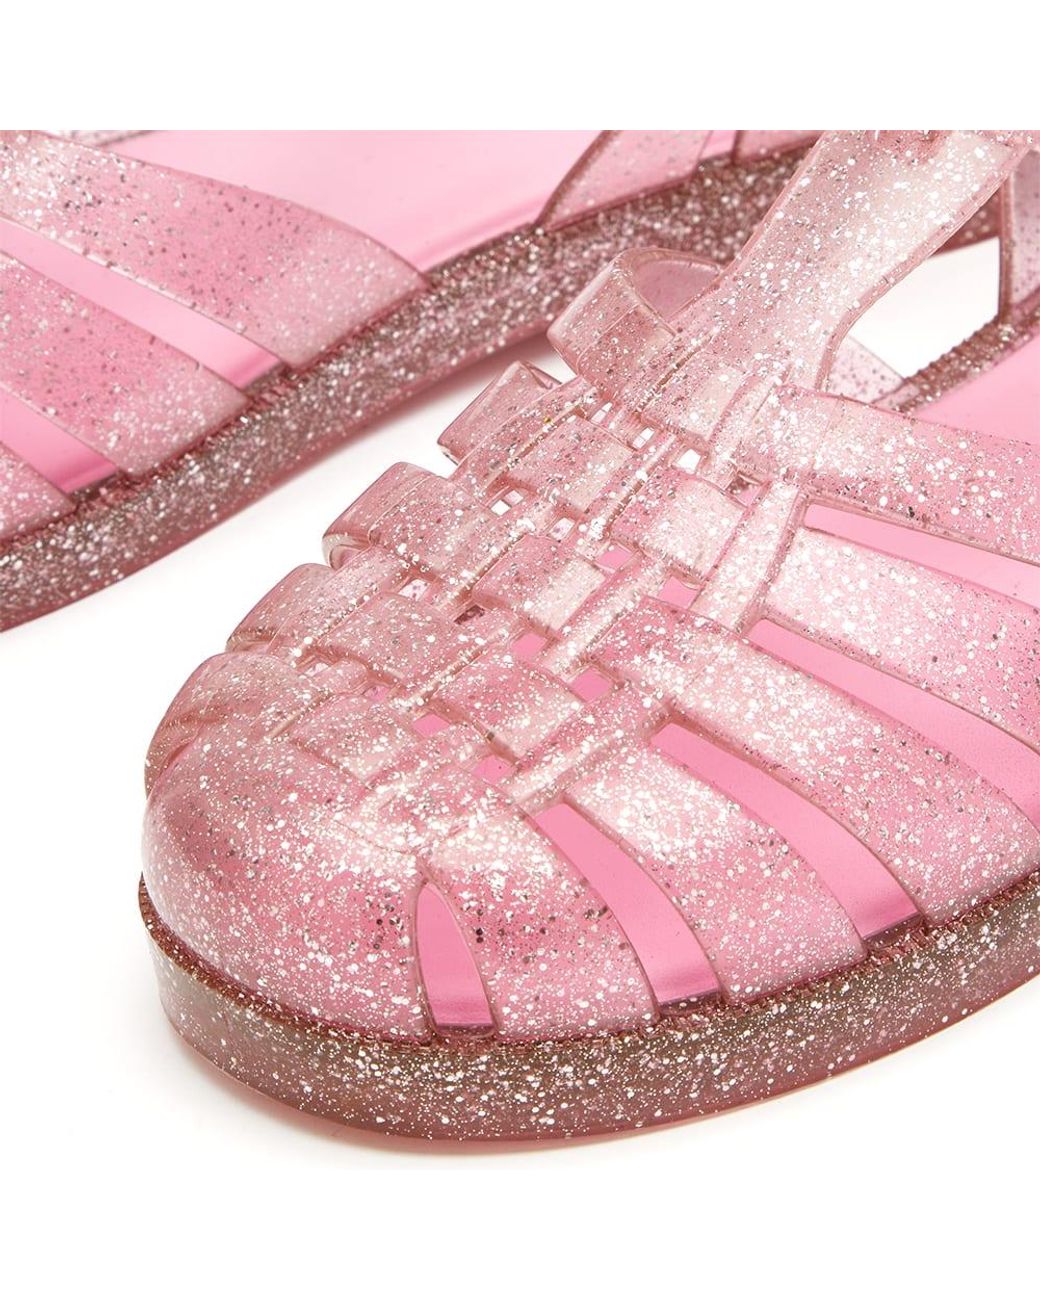 Old Navy Girls Pink Glitter Jelly Sandals Size 13 | eBay